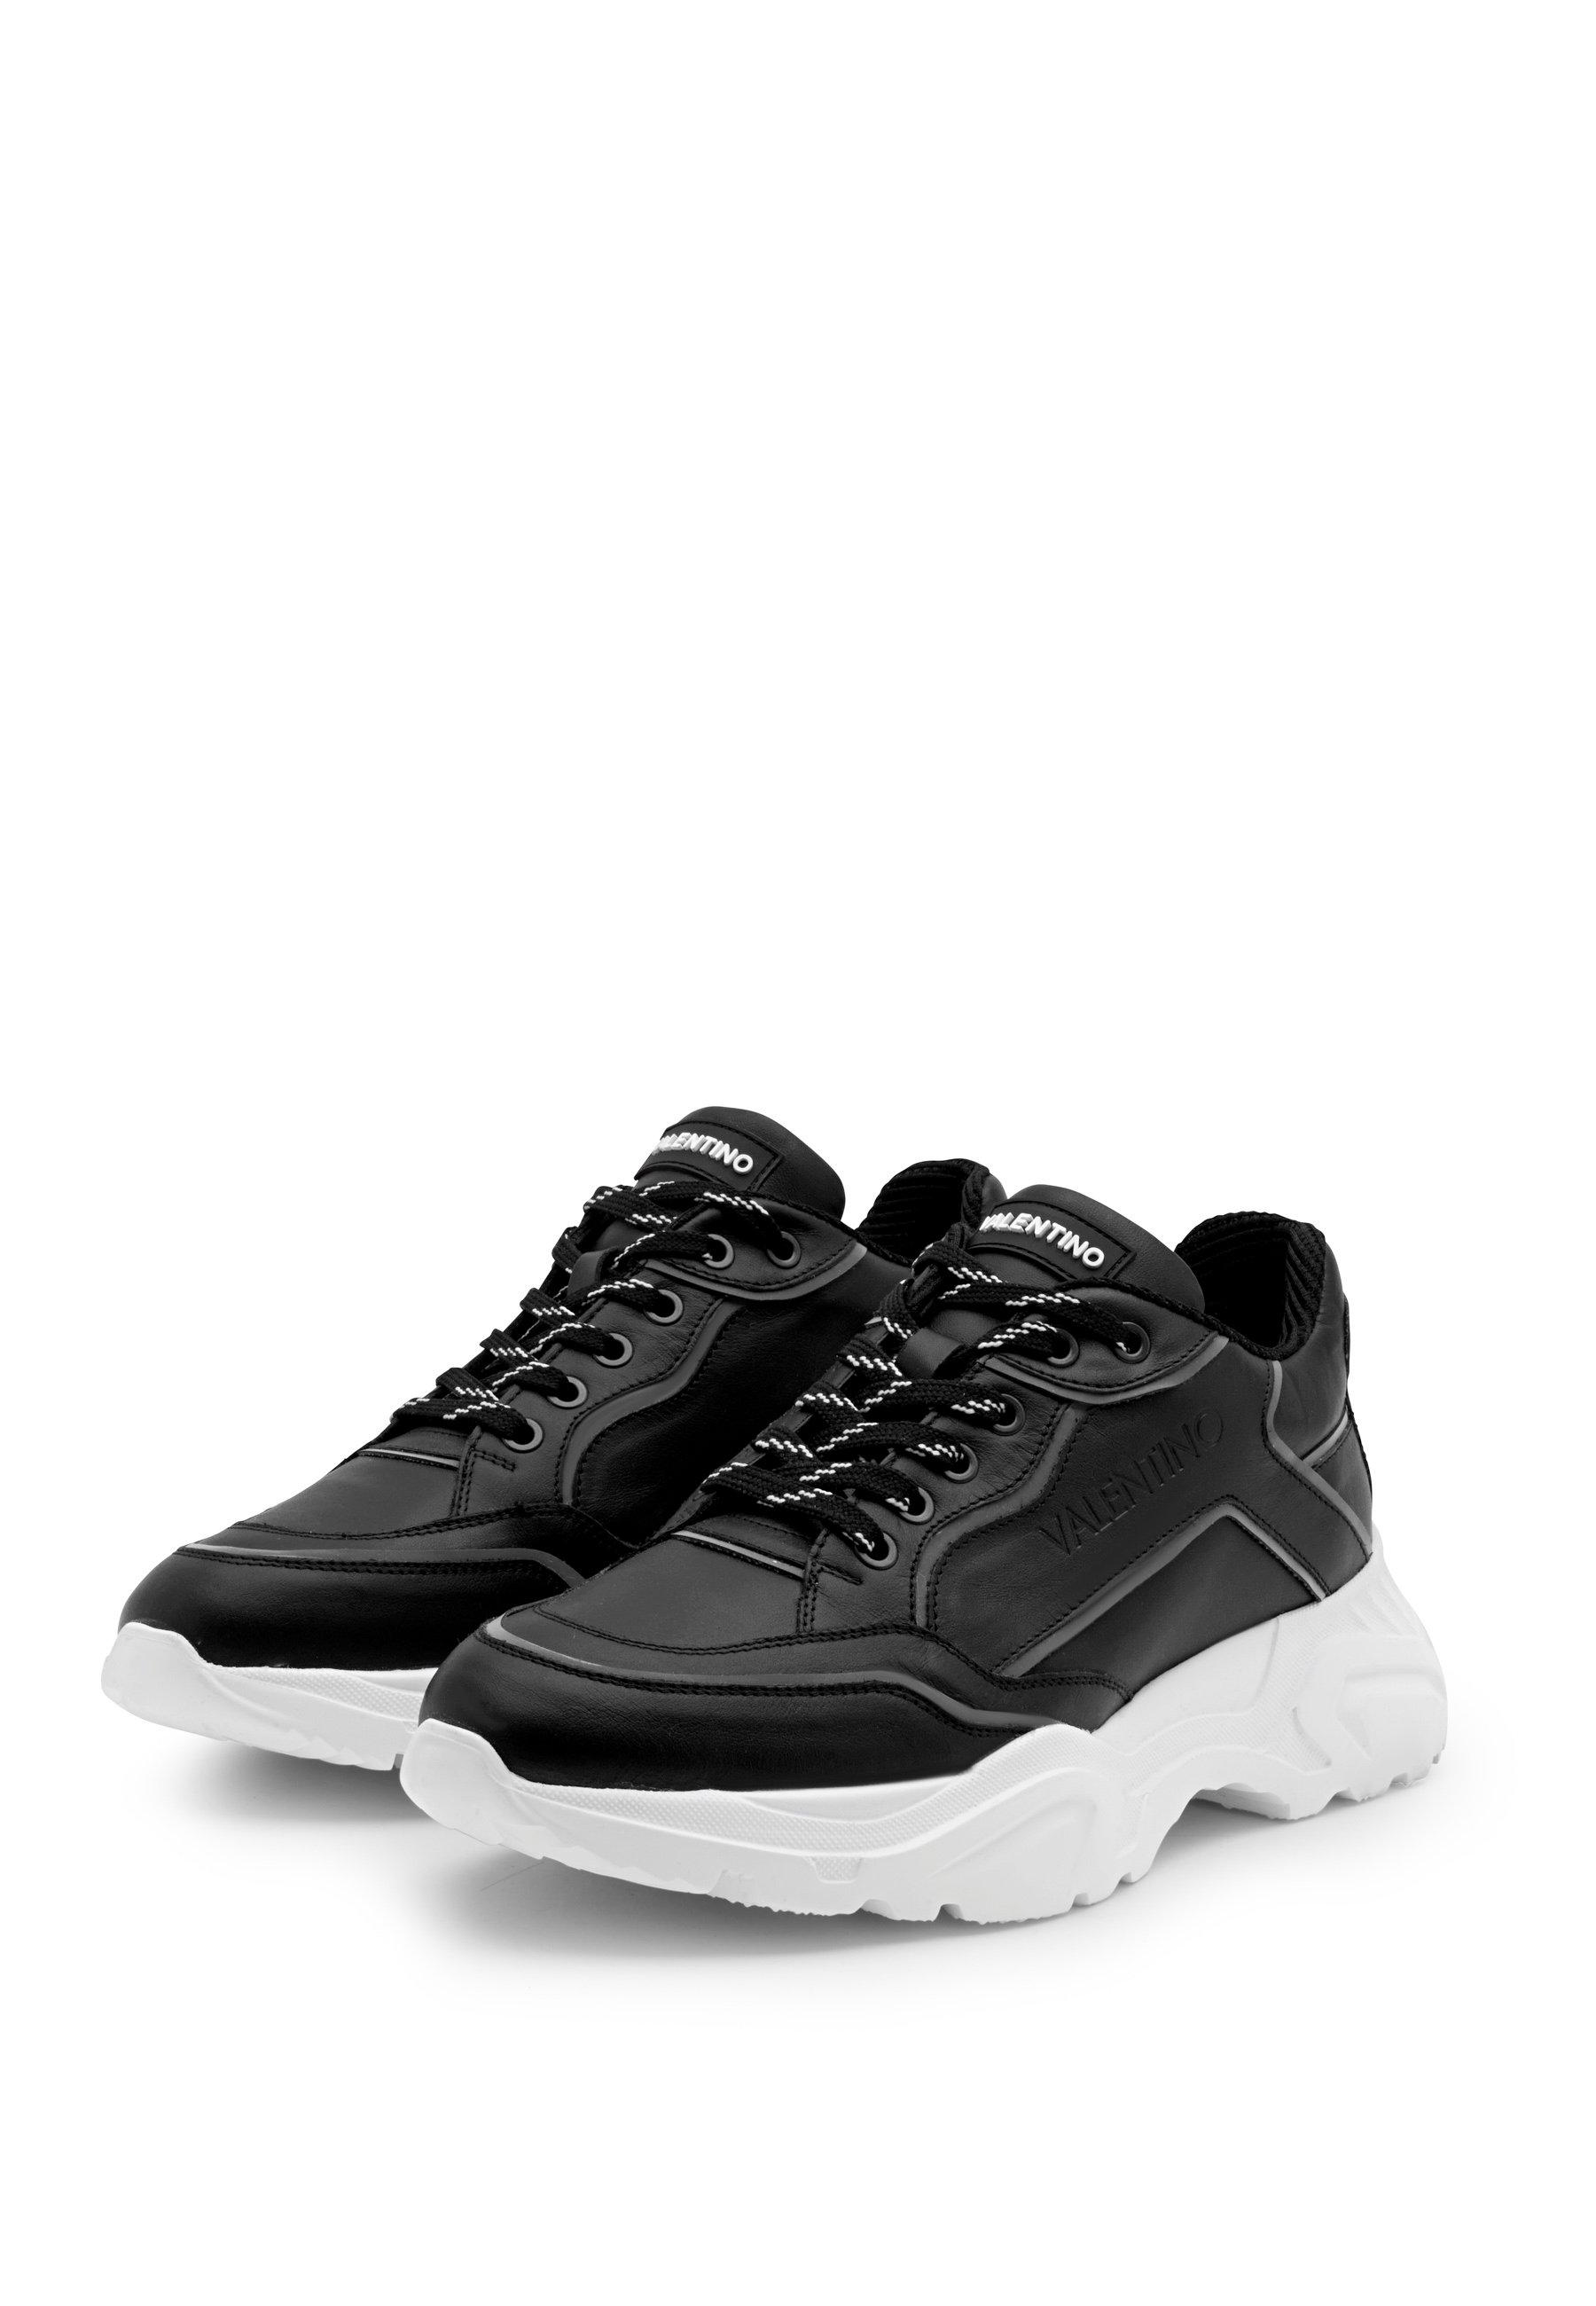 VALENTINO  Sneakers Nyx 01 